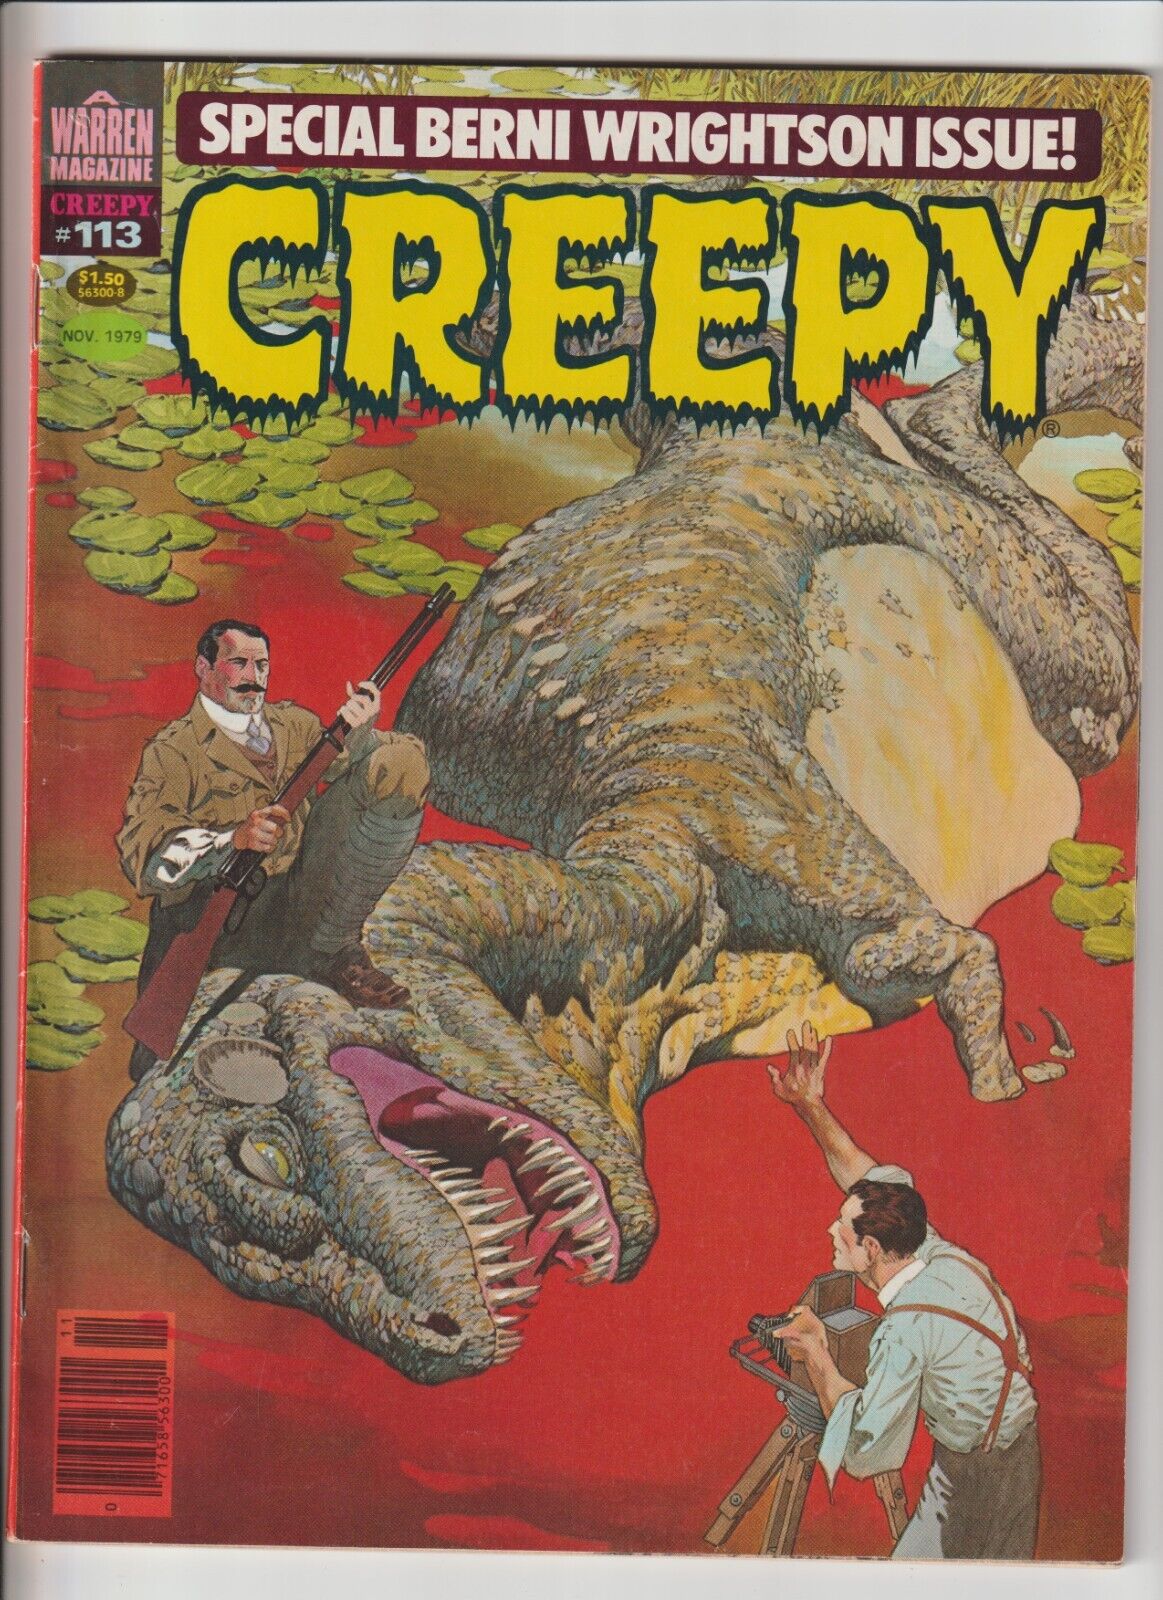 1979 Warren Magazine Creepy #113 Bernie Wrightson